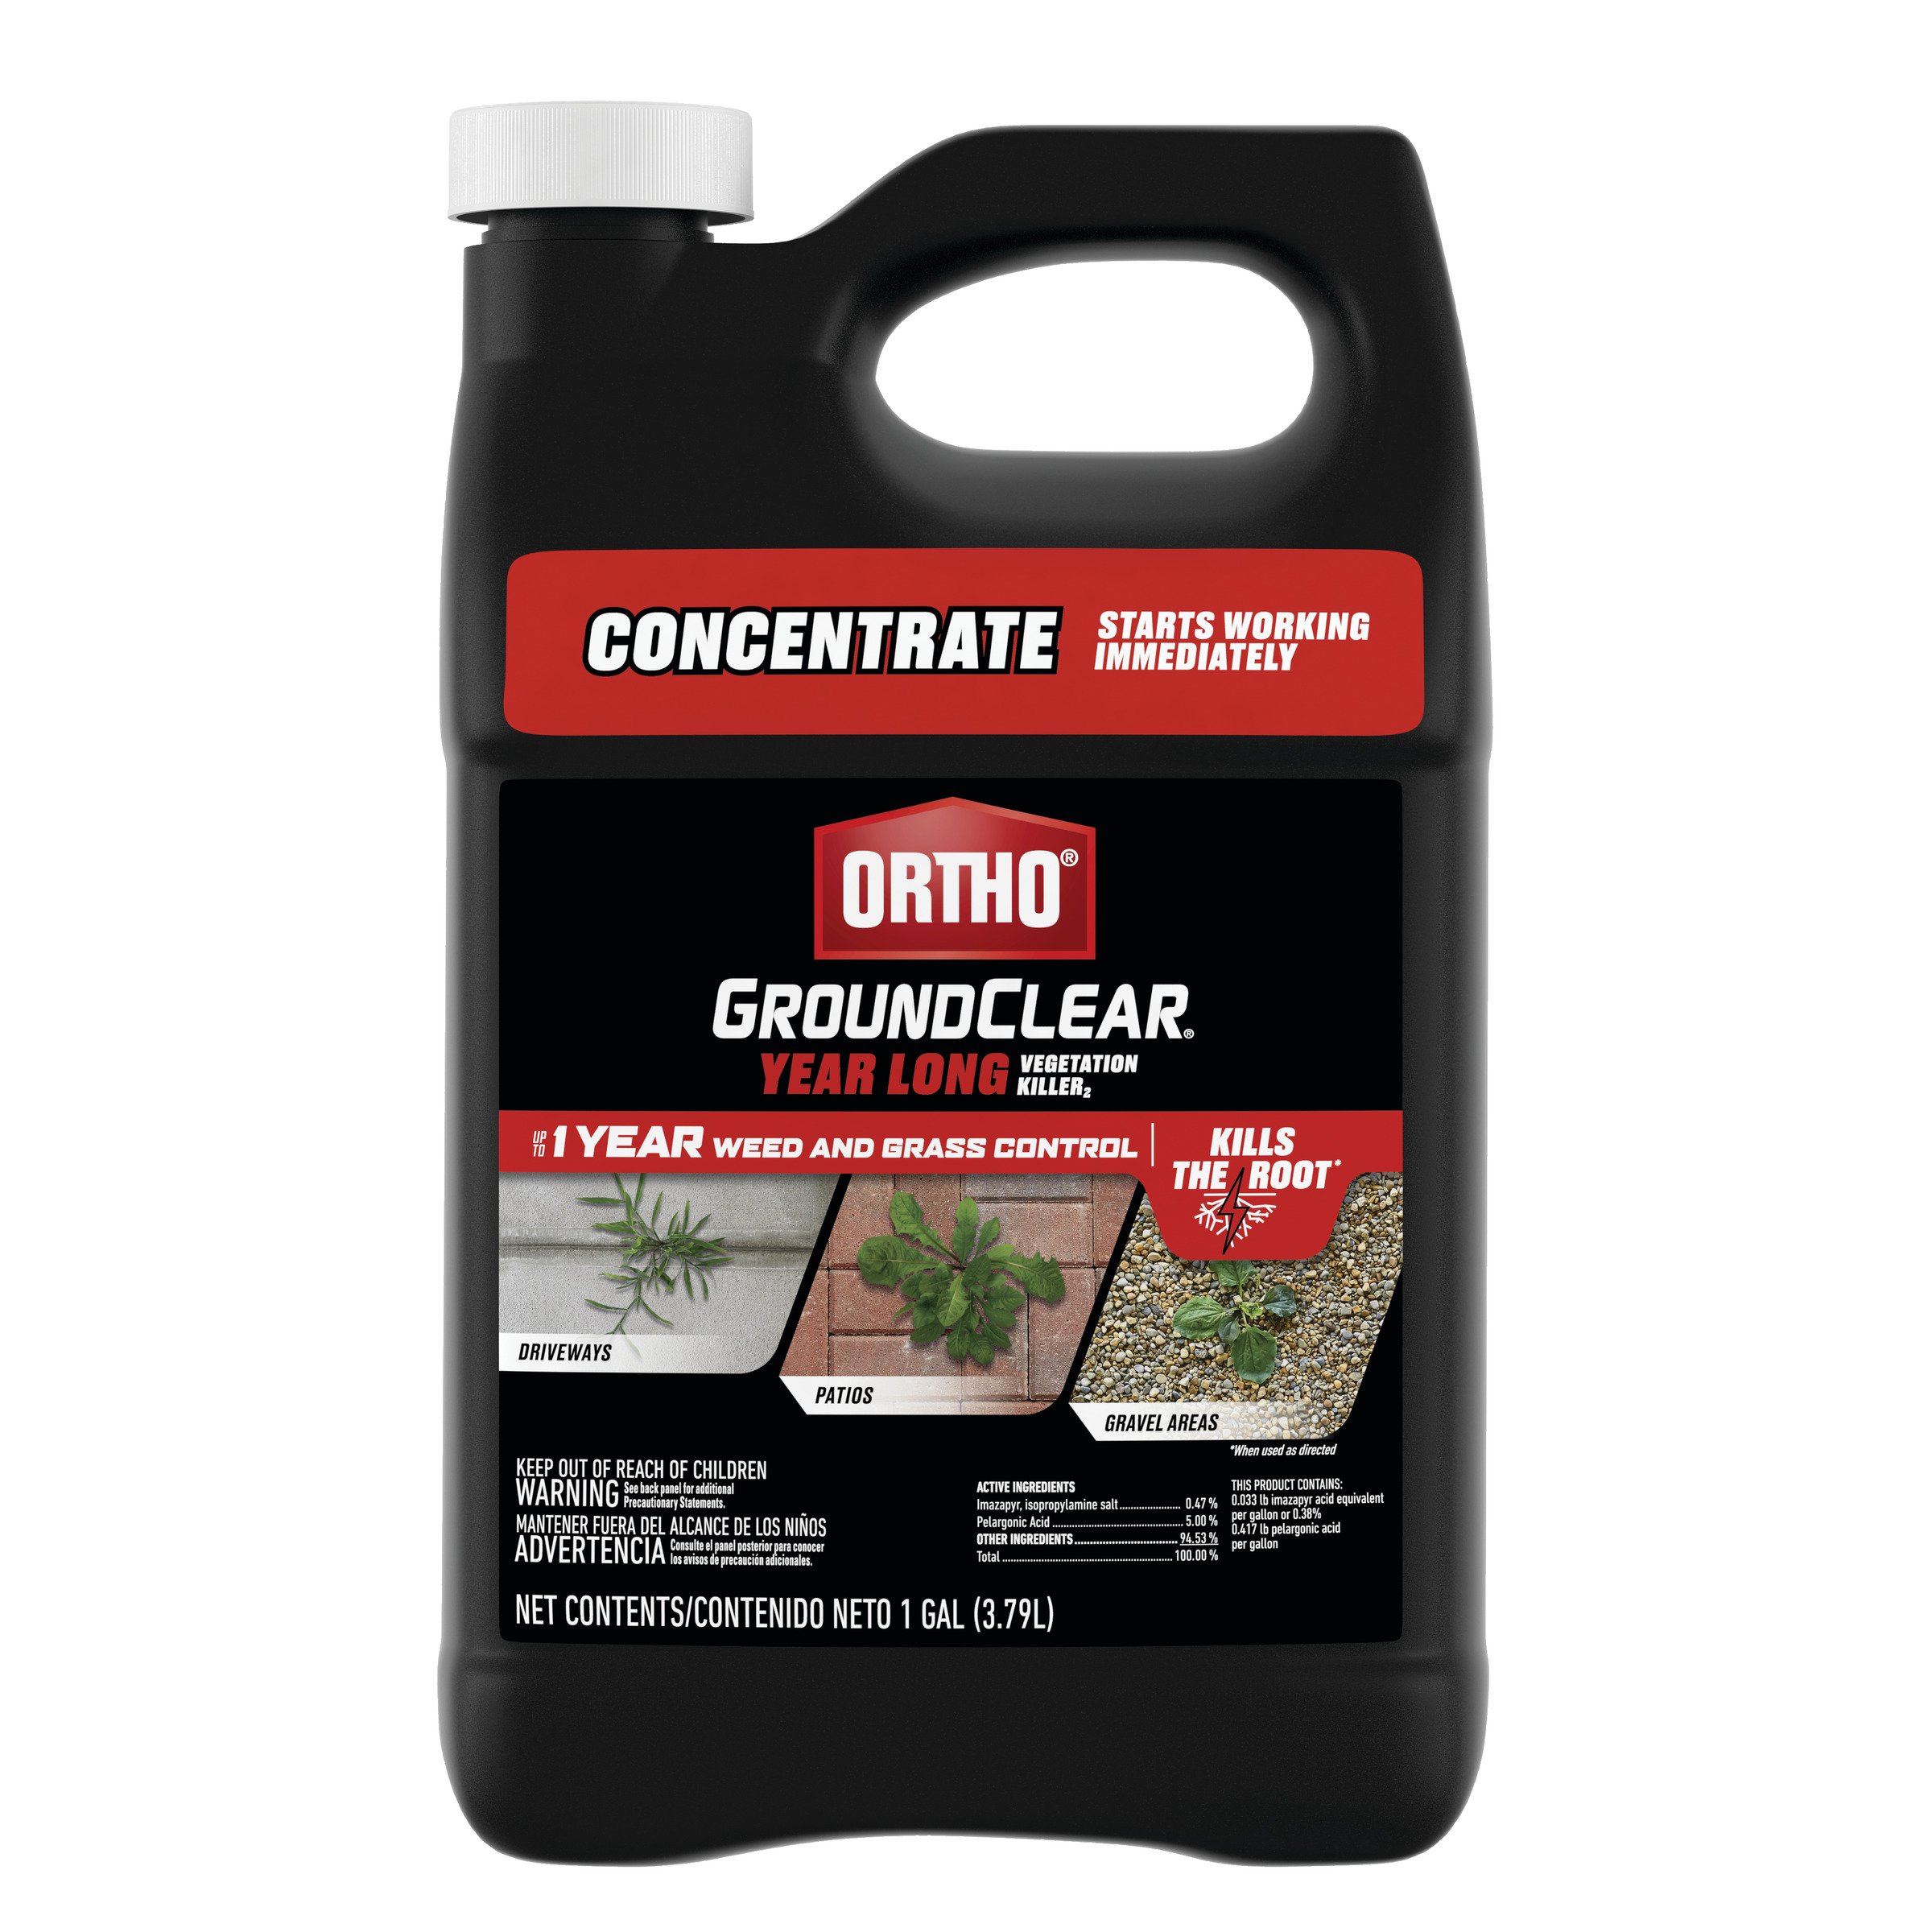 Ortho® GroundClear Year Long Vegetation Killer2 Concentrate, 1 Gallon Bottle